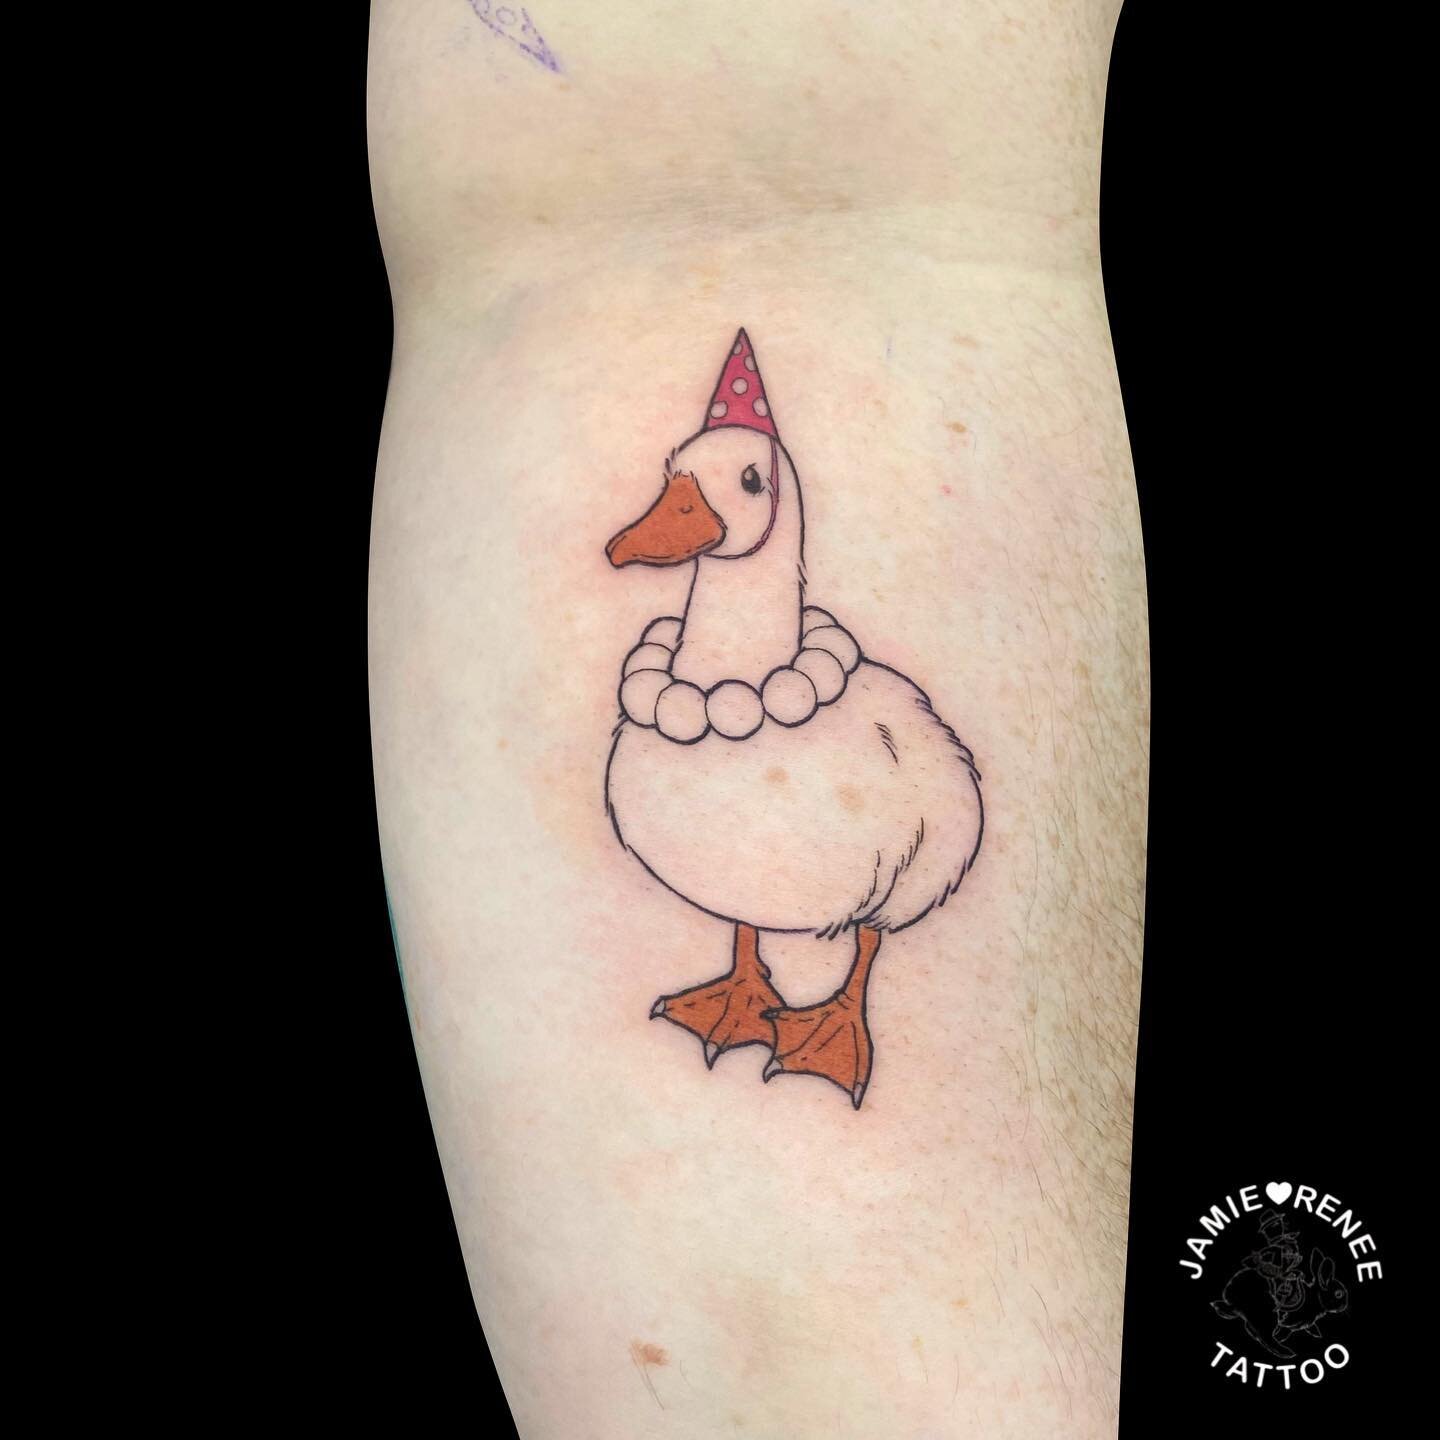 💖Party Duck with Pearls for Morgan!💖 A great choice for a first tattoo, thank you again! @stencil.jam @kwadron @rawpigments @drmorsetattoo #tattoo #tattooartist #femaletattooartist #ladytattooer #nztattoo #wellingtontattoo #wellington #drmorsetatto